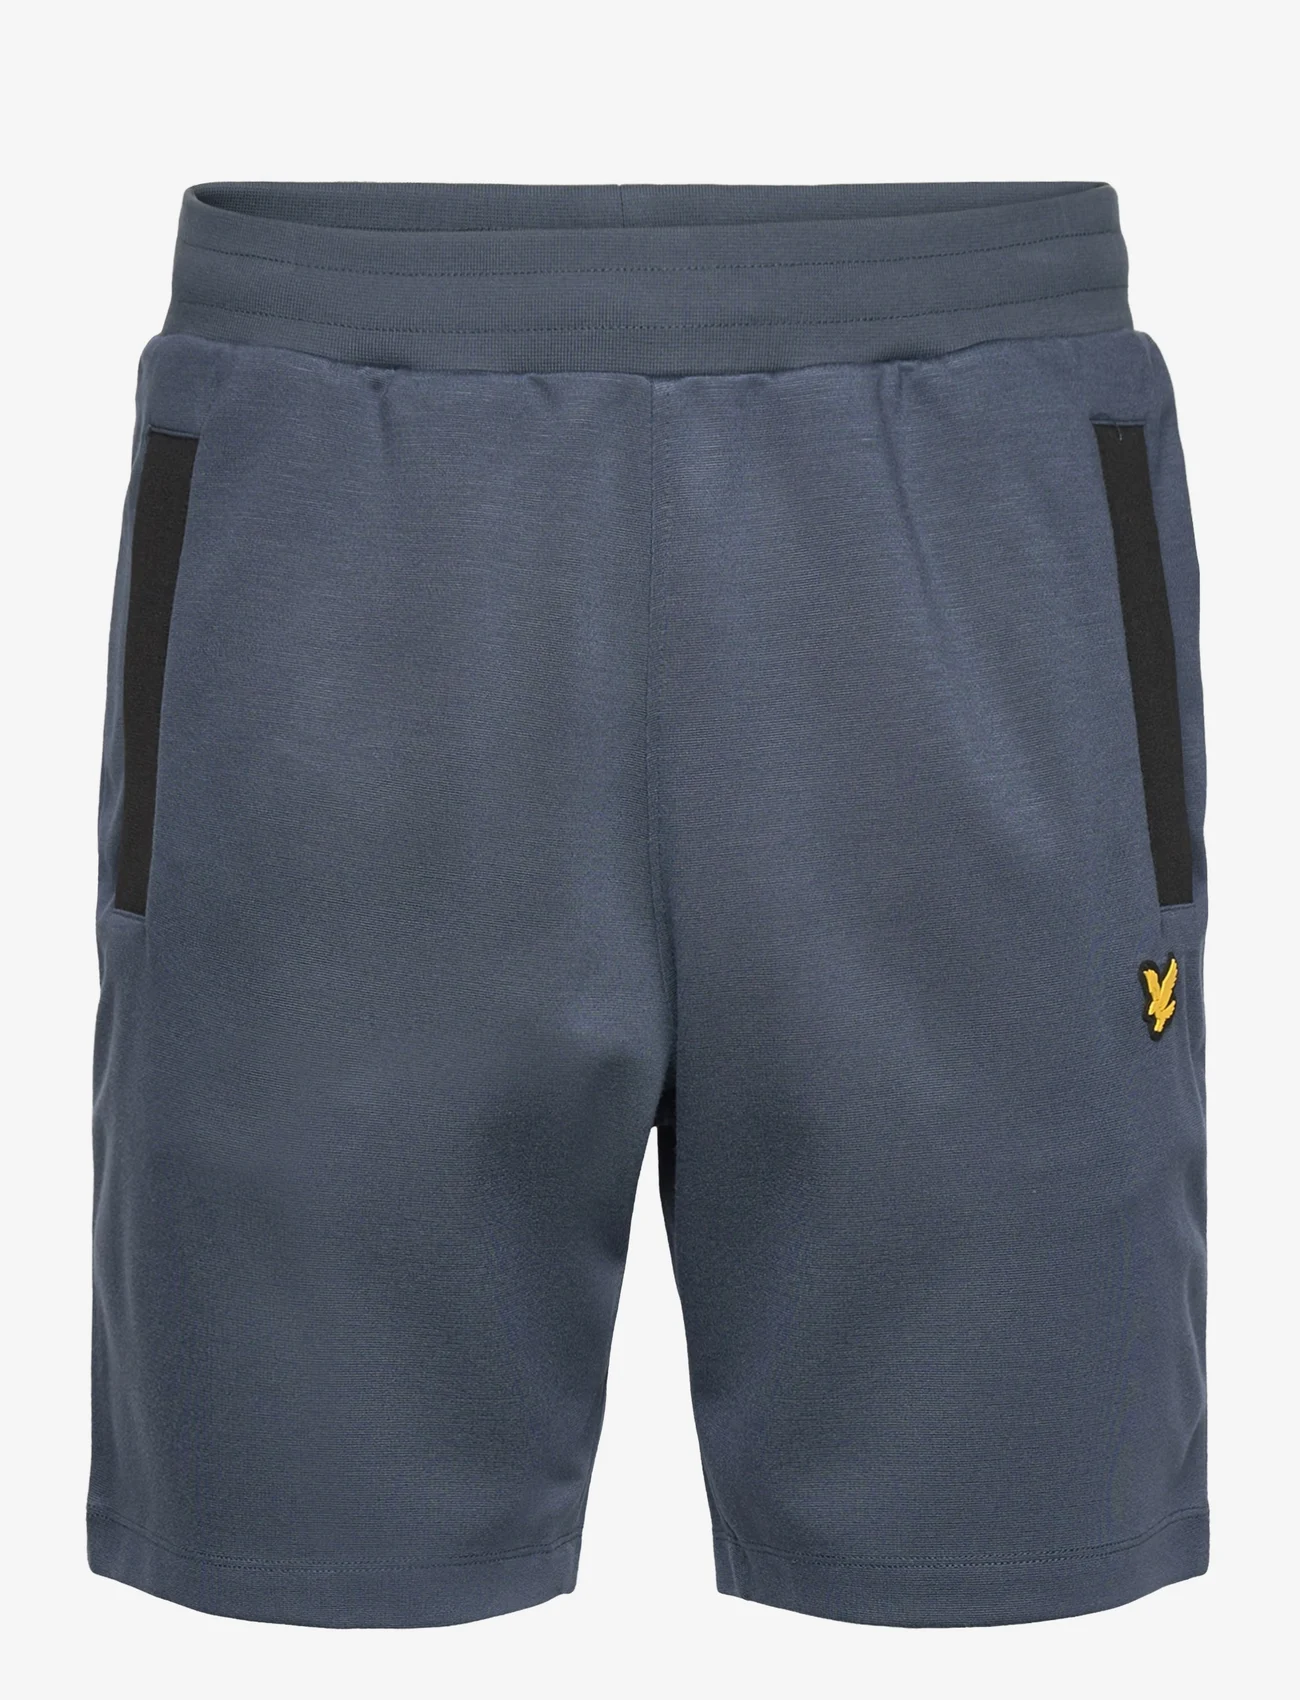 Lyle & Scott Sport - Pocket Branded Shorts - sports shorts - z118 light navy - 0